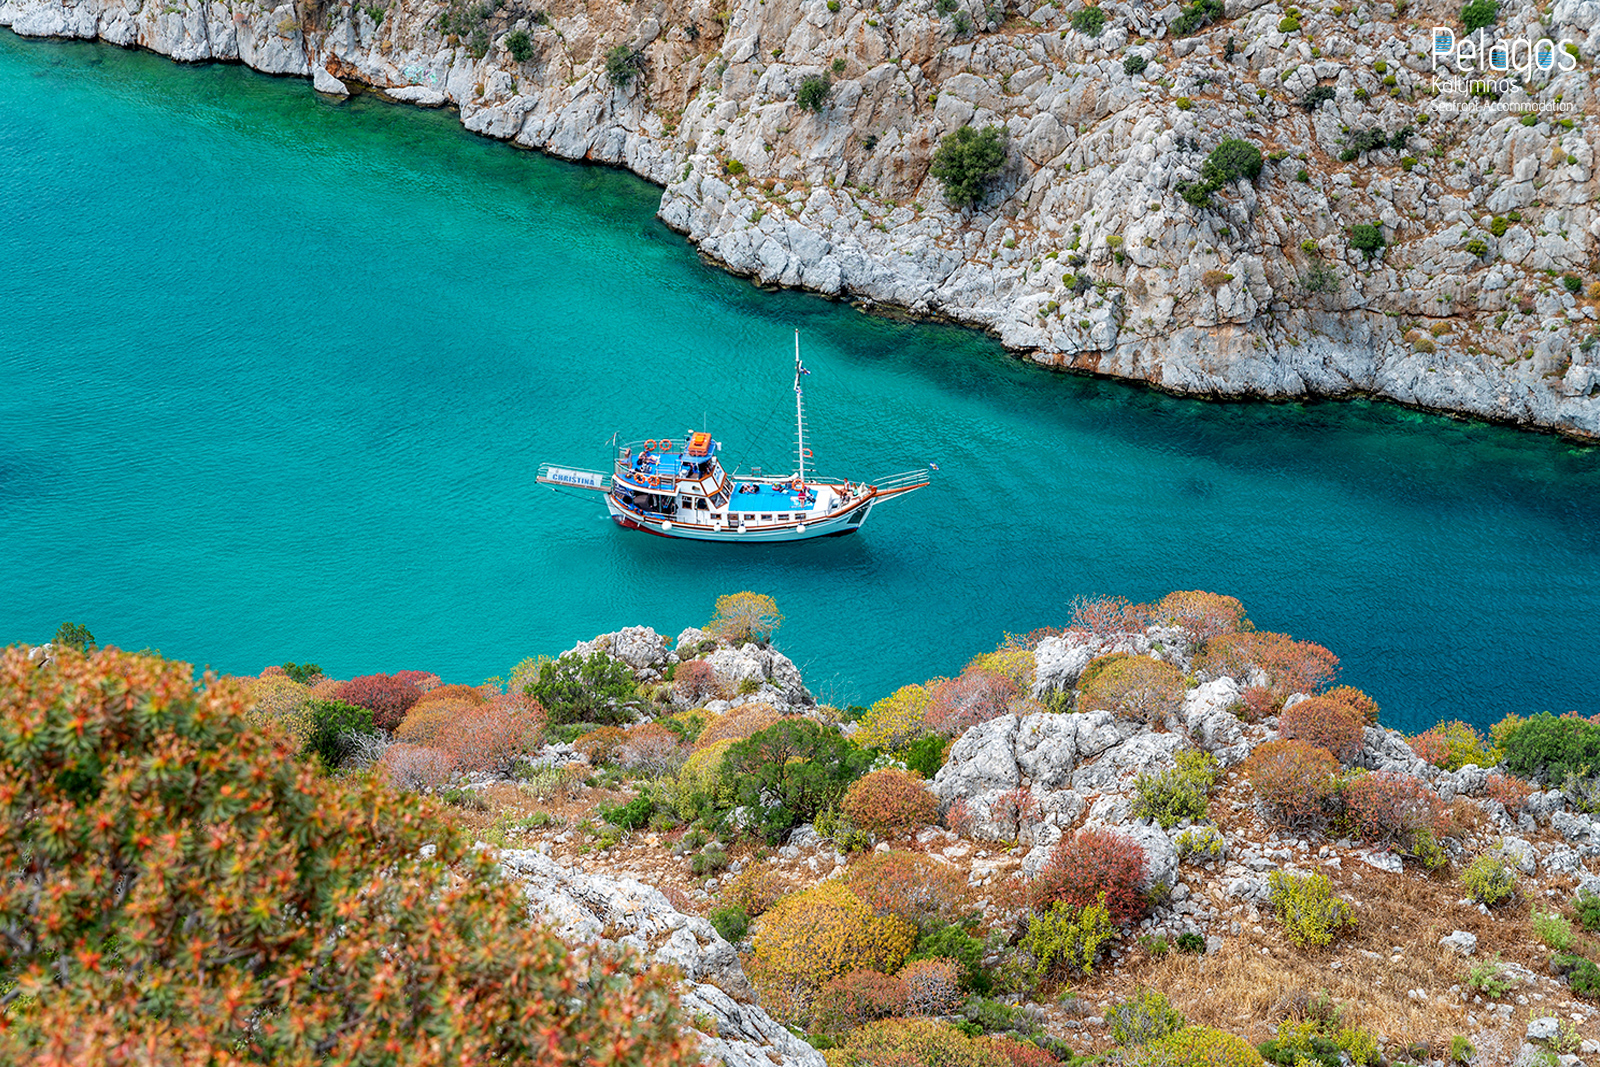 Pelagos – Seafront Accommodation Kalymnos Greece